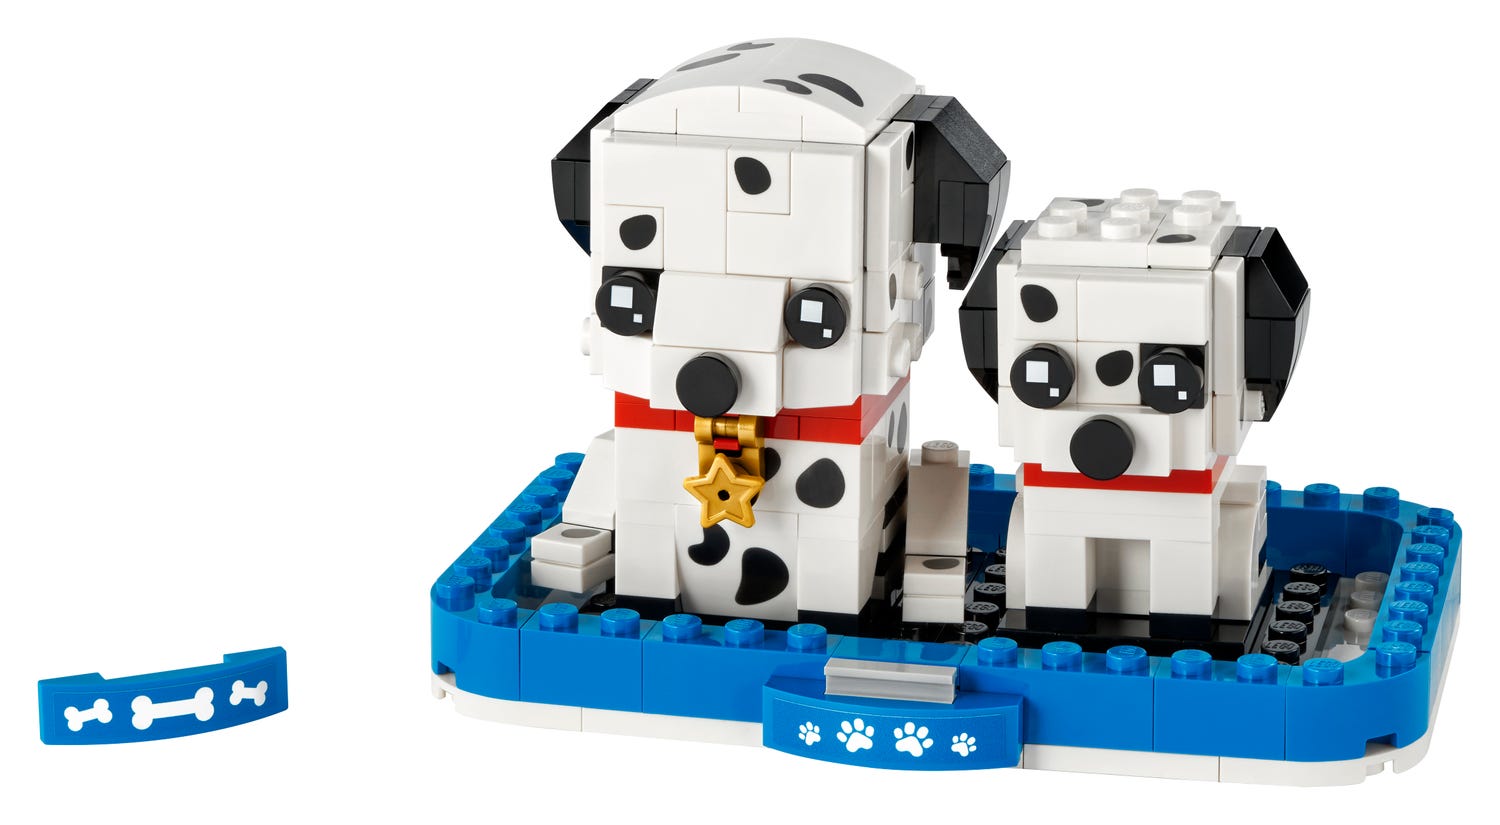 Lego Exclusives BrickHeadz: 252-Piece Dalmatian $10.49, 236-Piece St. Bernard  $10.49, 237-Piece French Bulldog $10.49, More + Free Shipping $35+